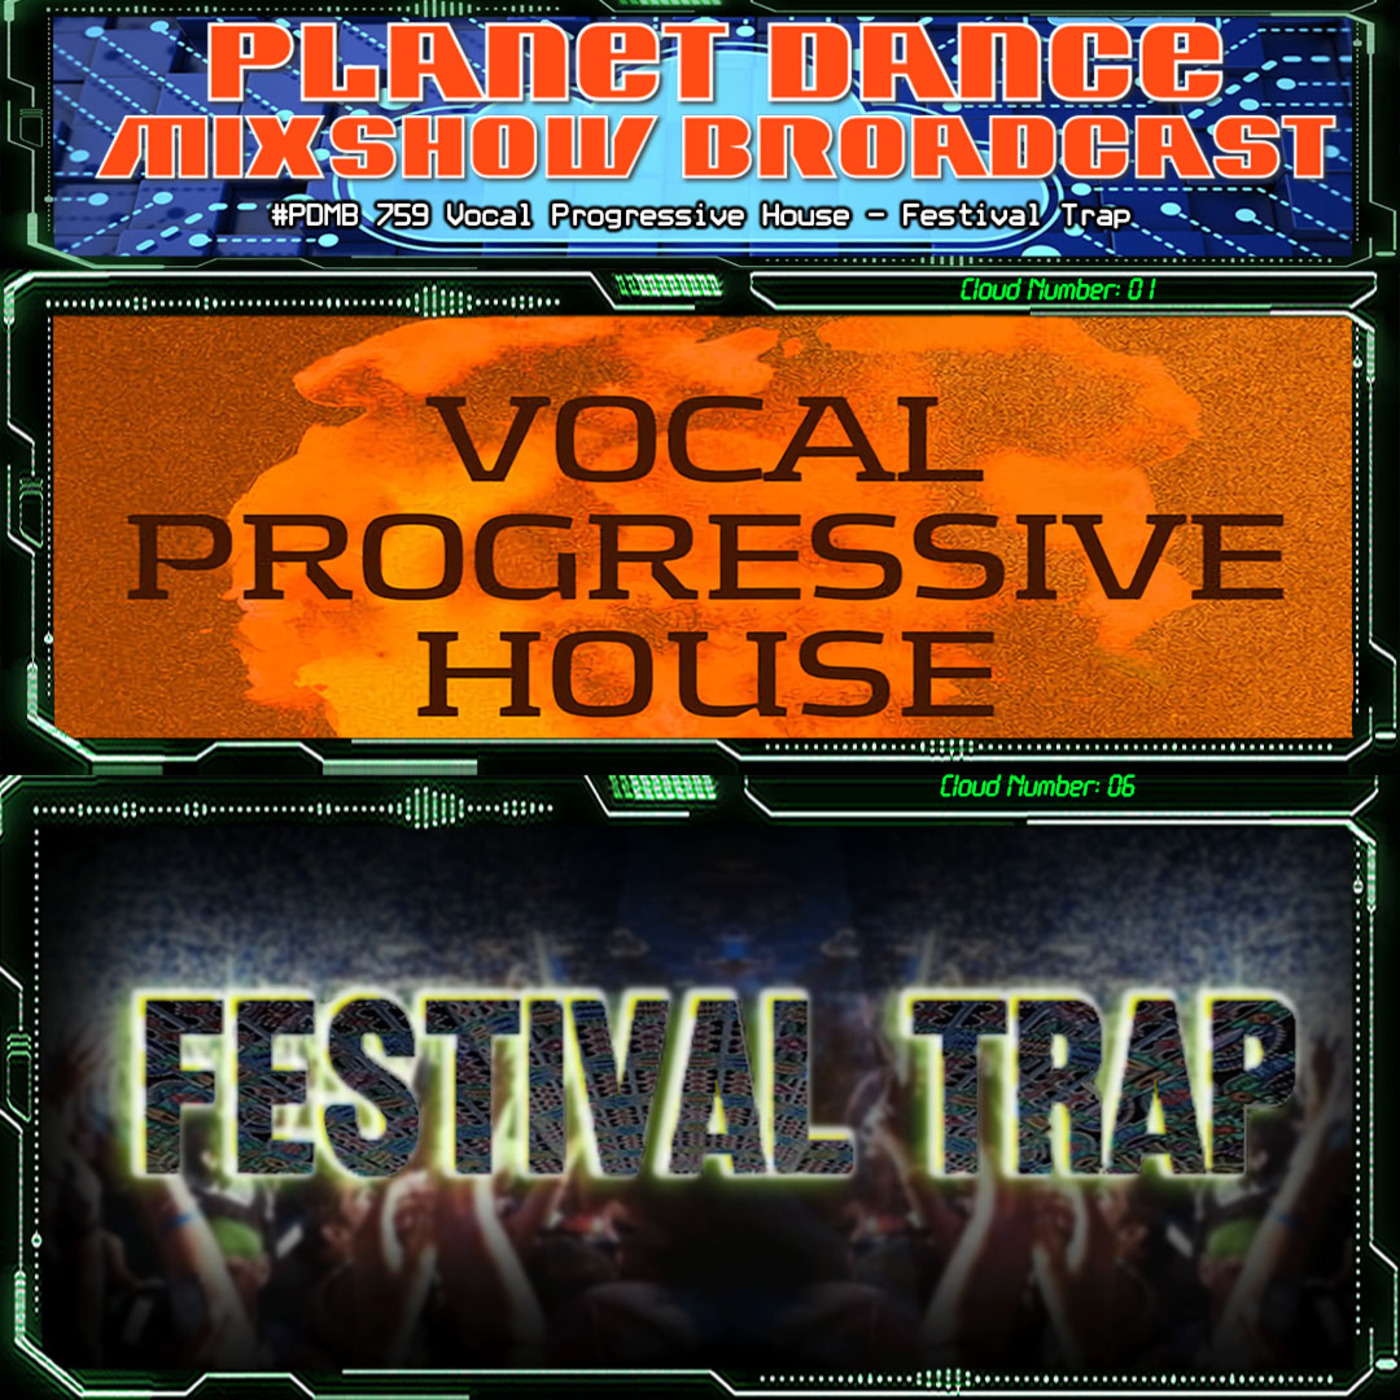 Planet Dance Mixshow Broadcast 759 Vocal Progressive House - Festival Trap